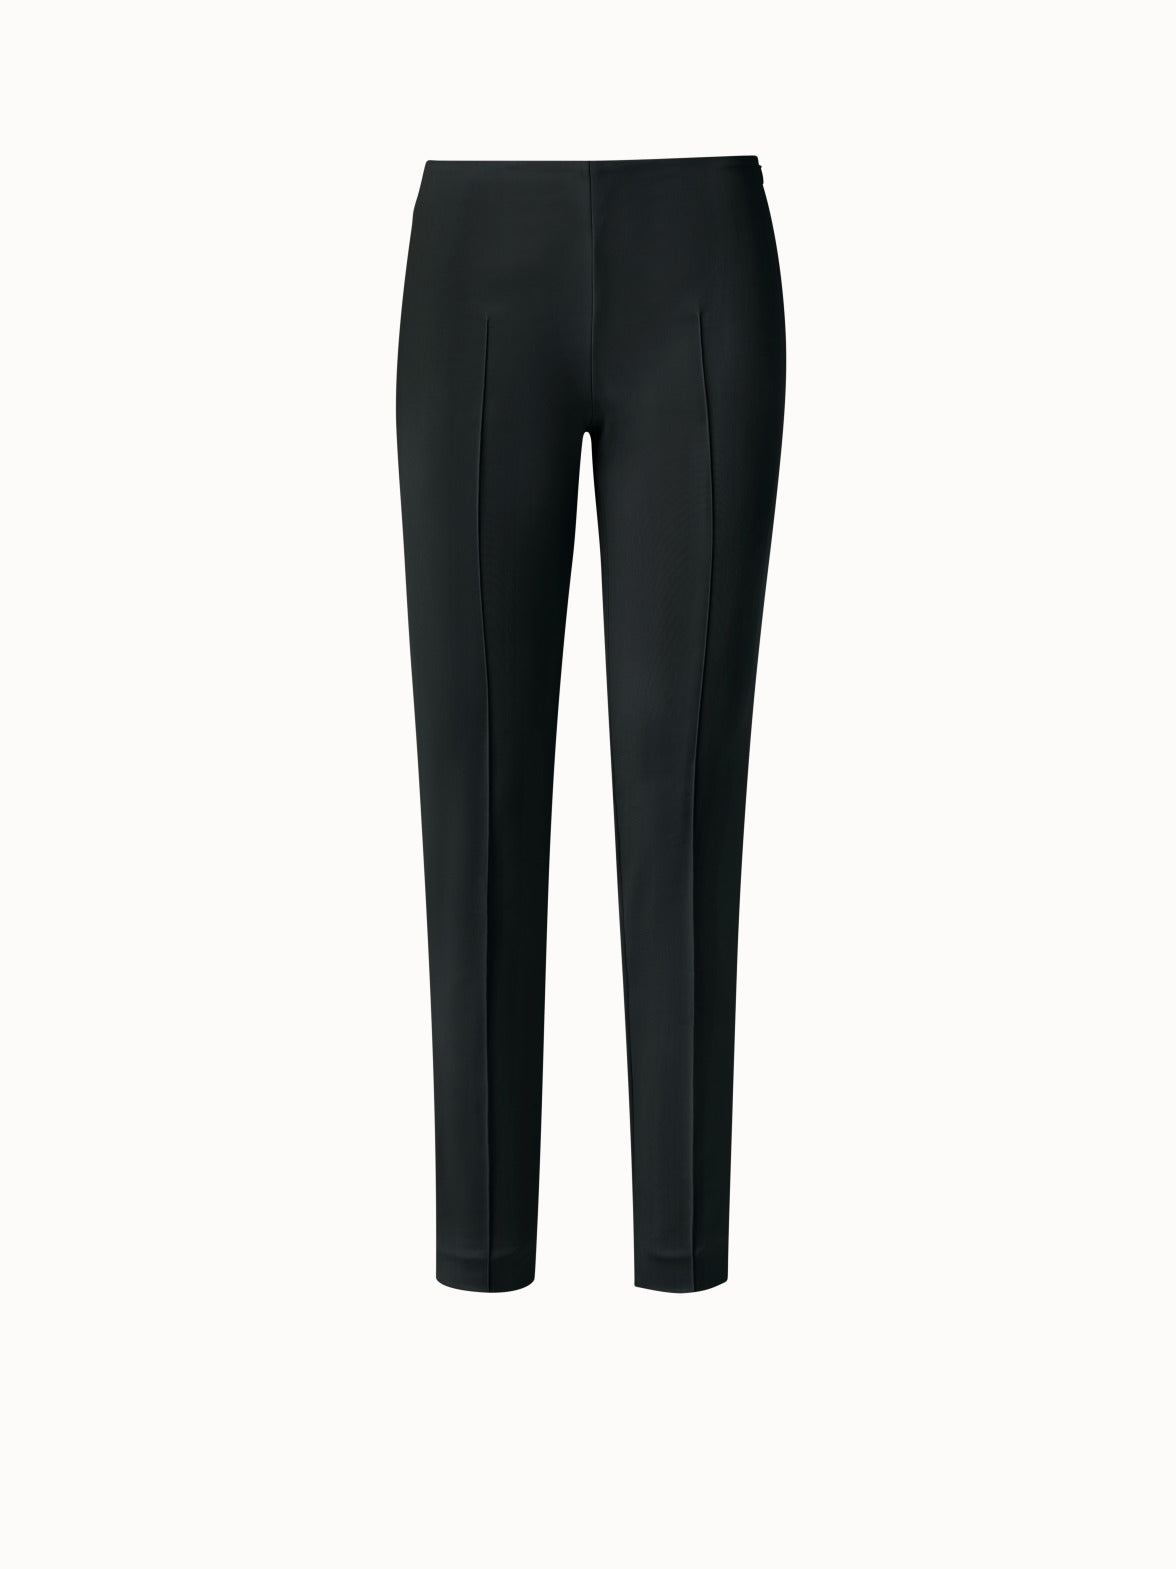 AUSIMIAR Women's Vertical Stripe Stretch Skinny Dress Pants,Black